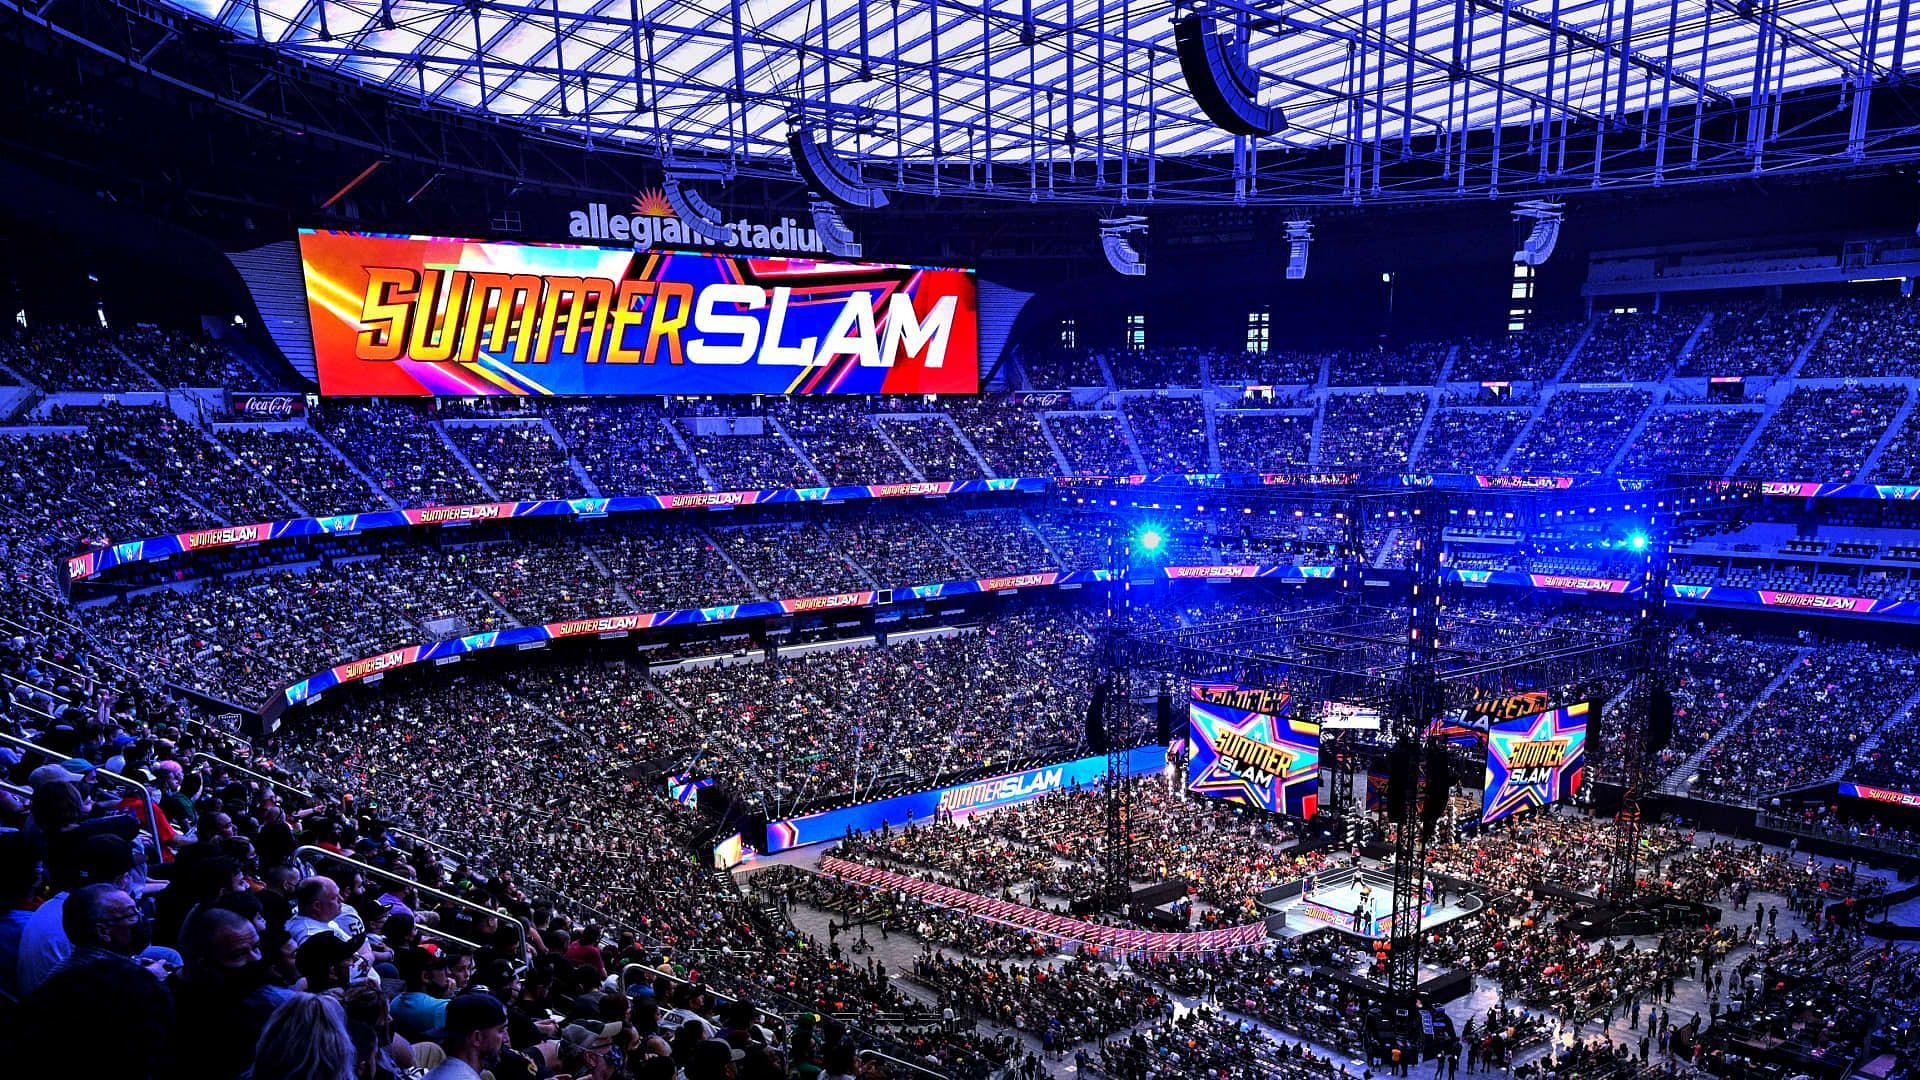 Roman Reigns won the Universal Championship at SummerSlam 2020